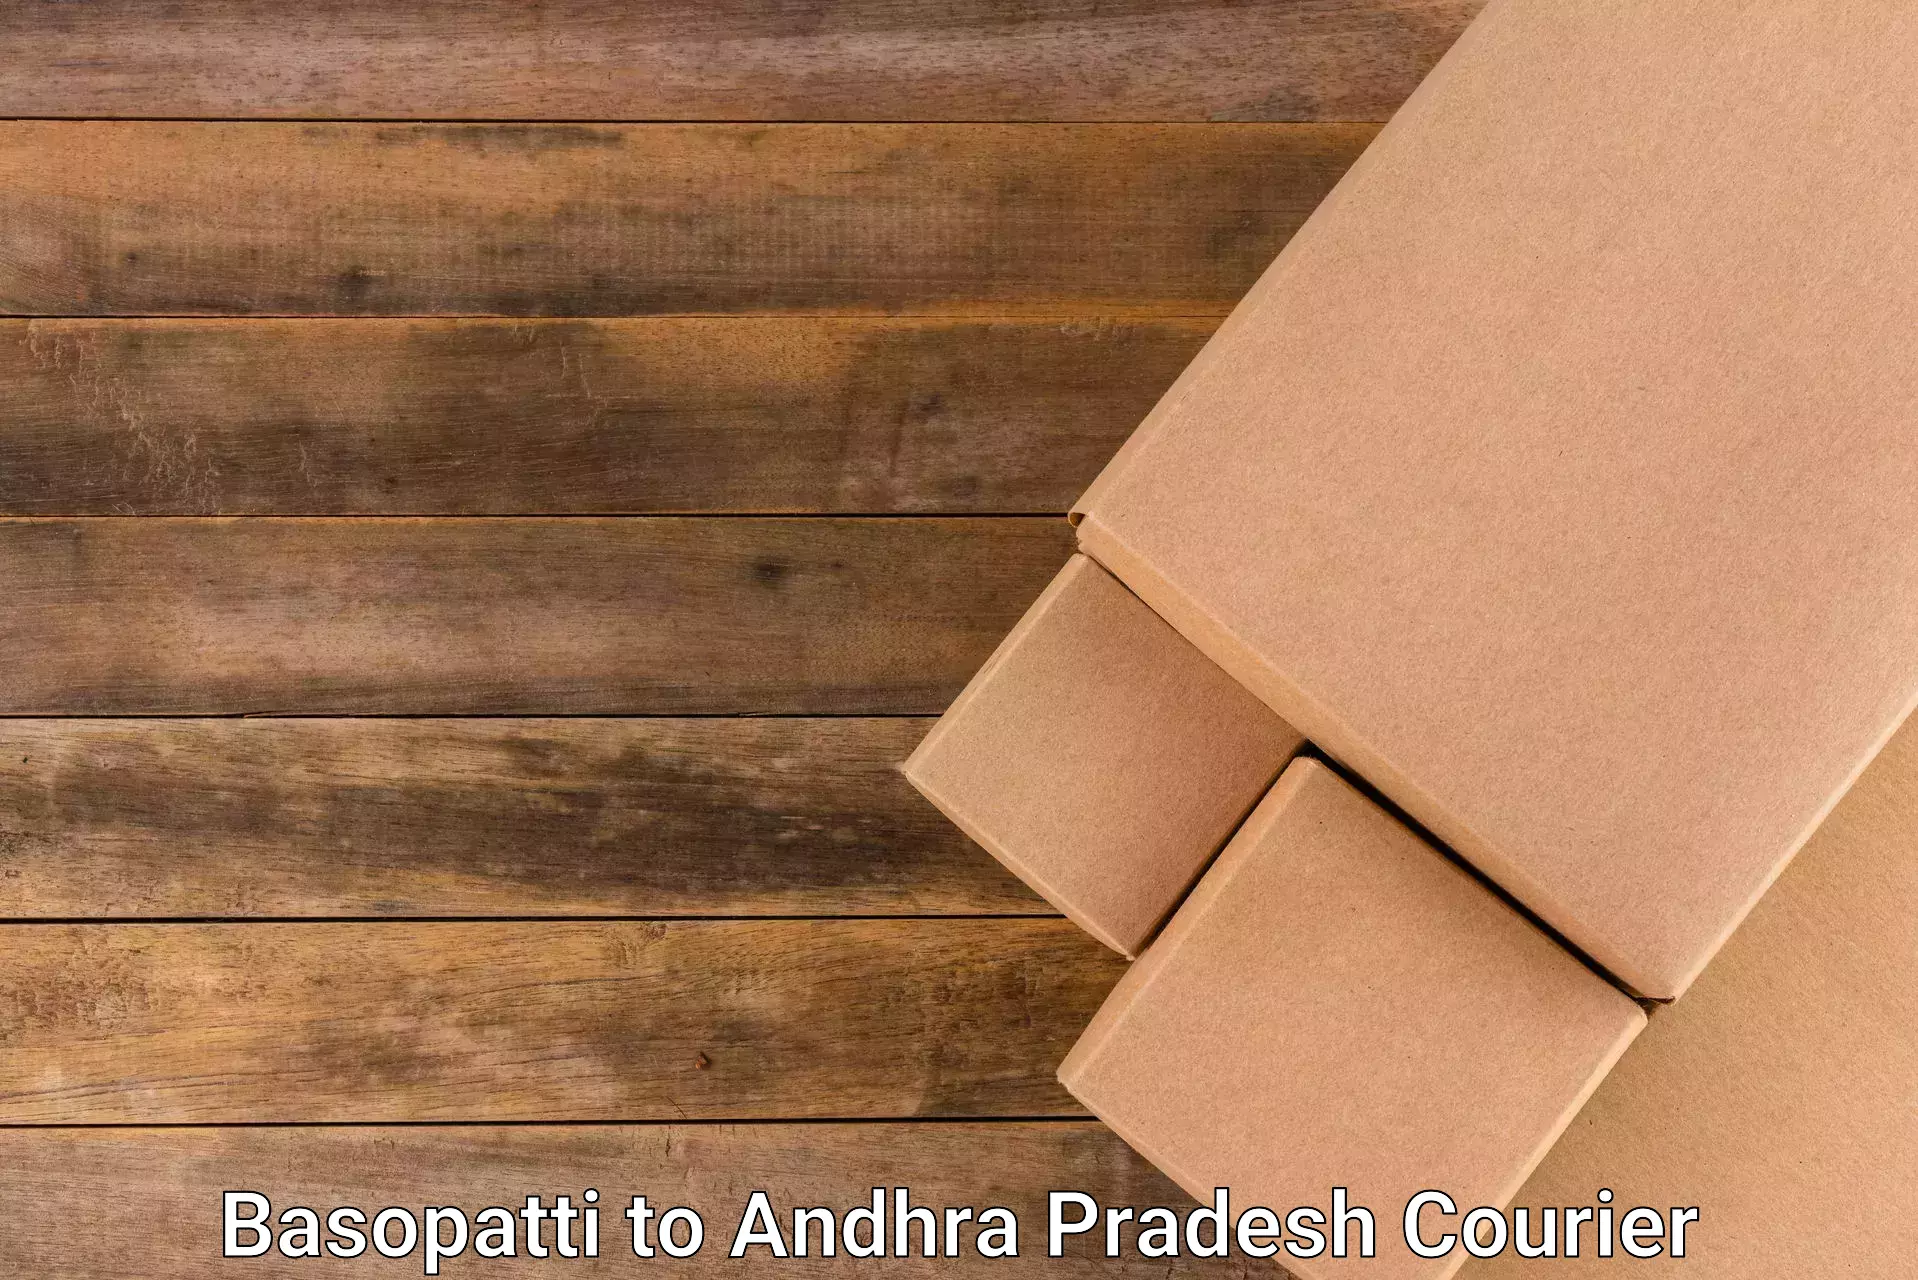 Courier service efficiency Basopatti to Andhra Pradesh